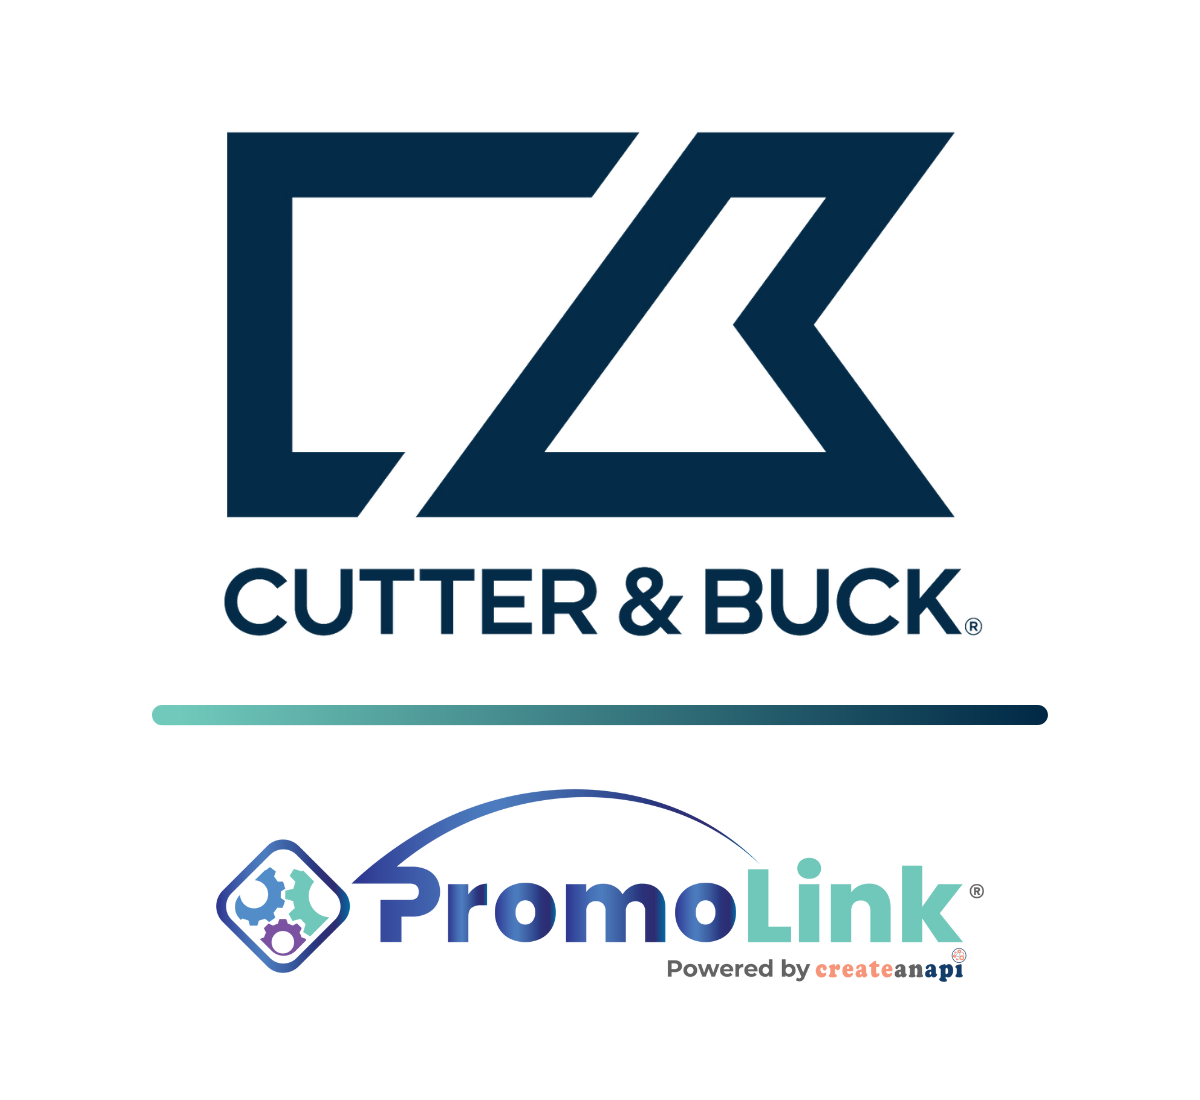 
PromoLink is the preferred integration platform for 
Cutter & Buck